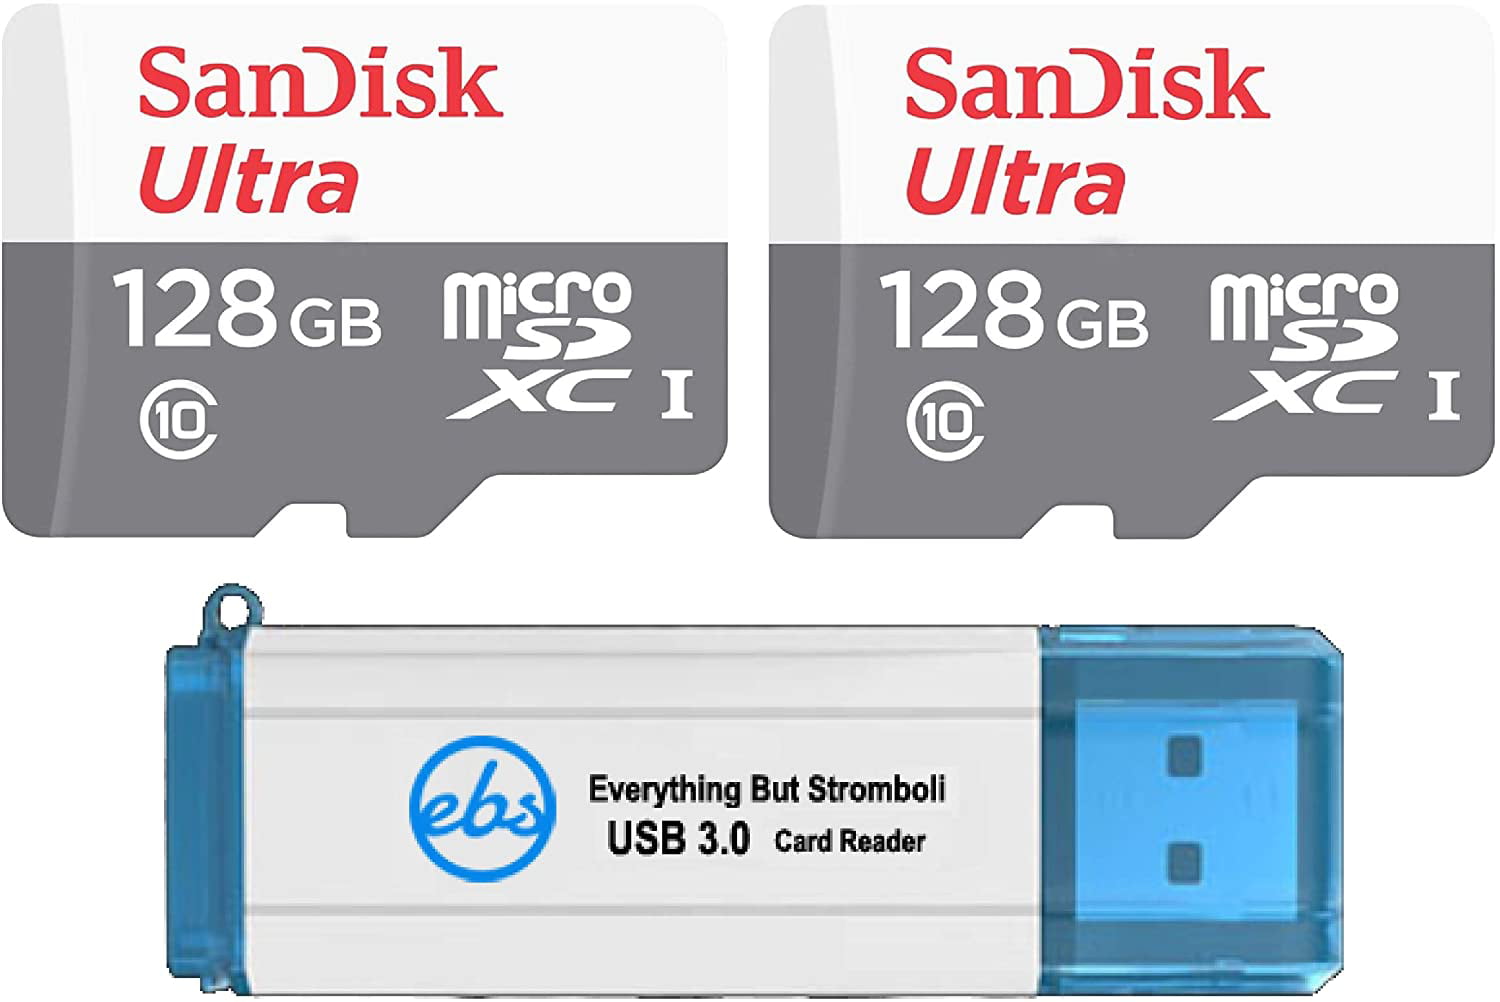 10 SDSQUNS-128G-GN6MN SanDisk Ultra MicroSDXC 128 GB 80 MB/S CL